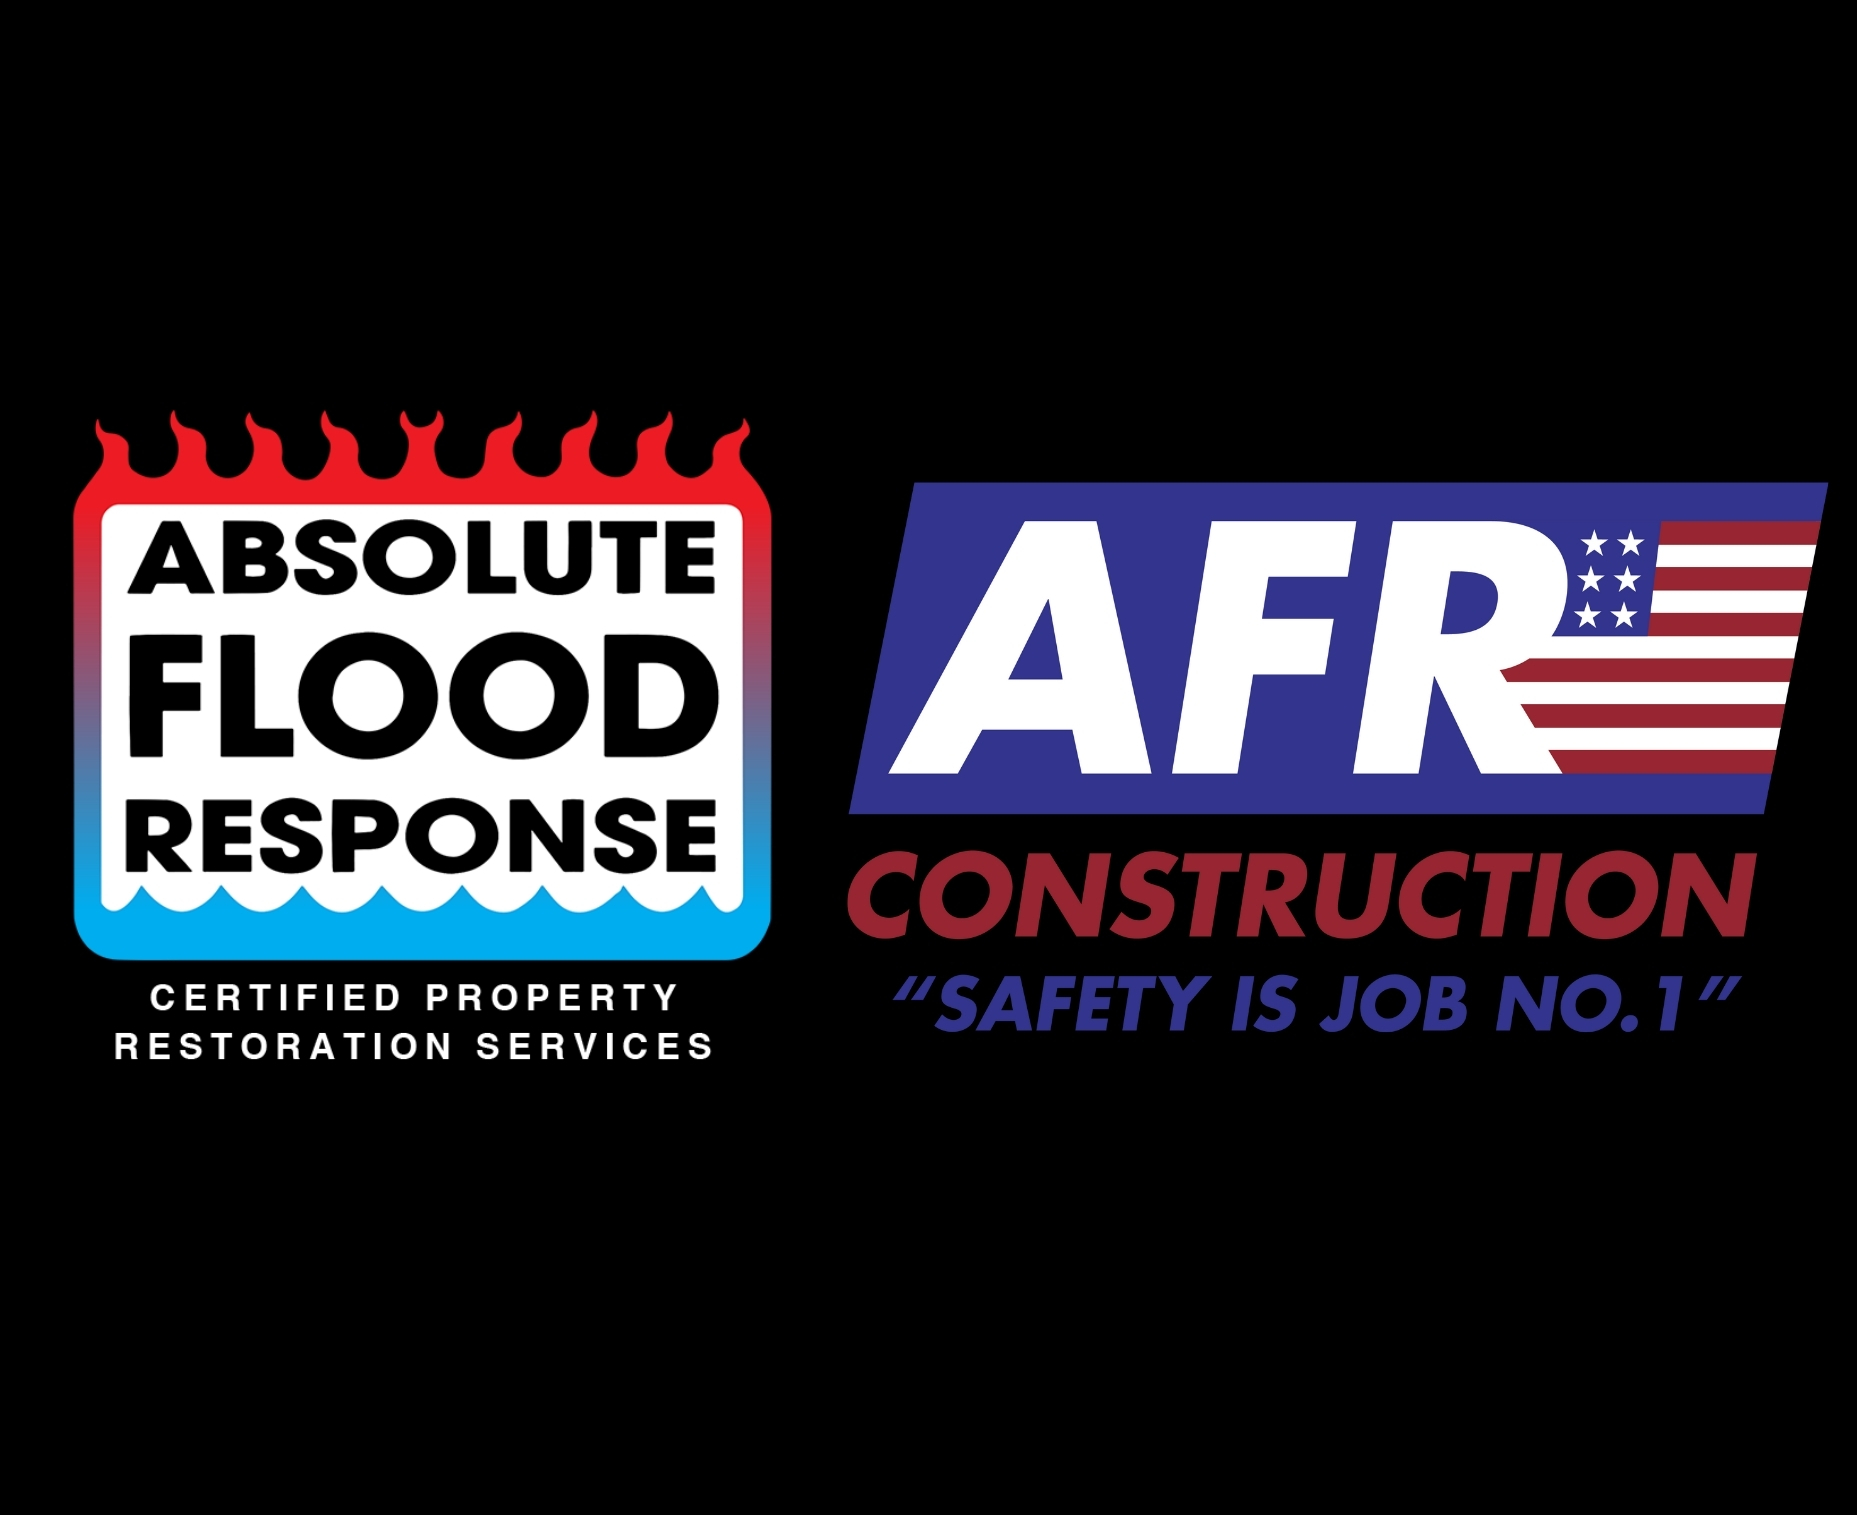 Absolute Flood Response & AFR Construction logo